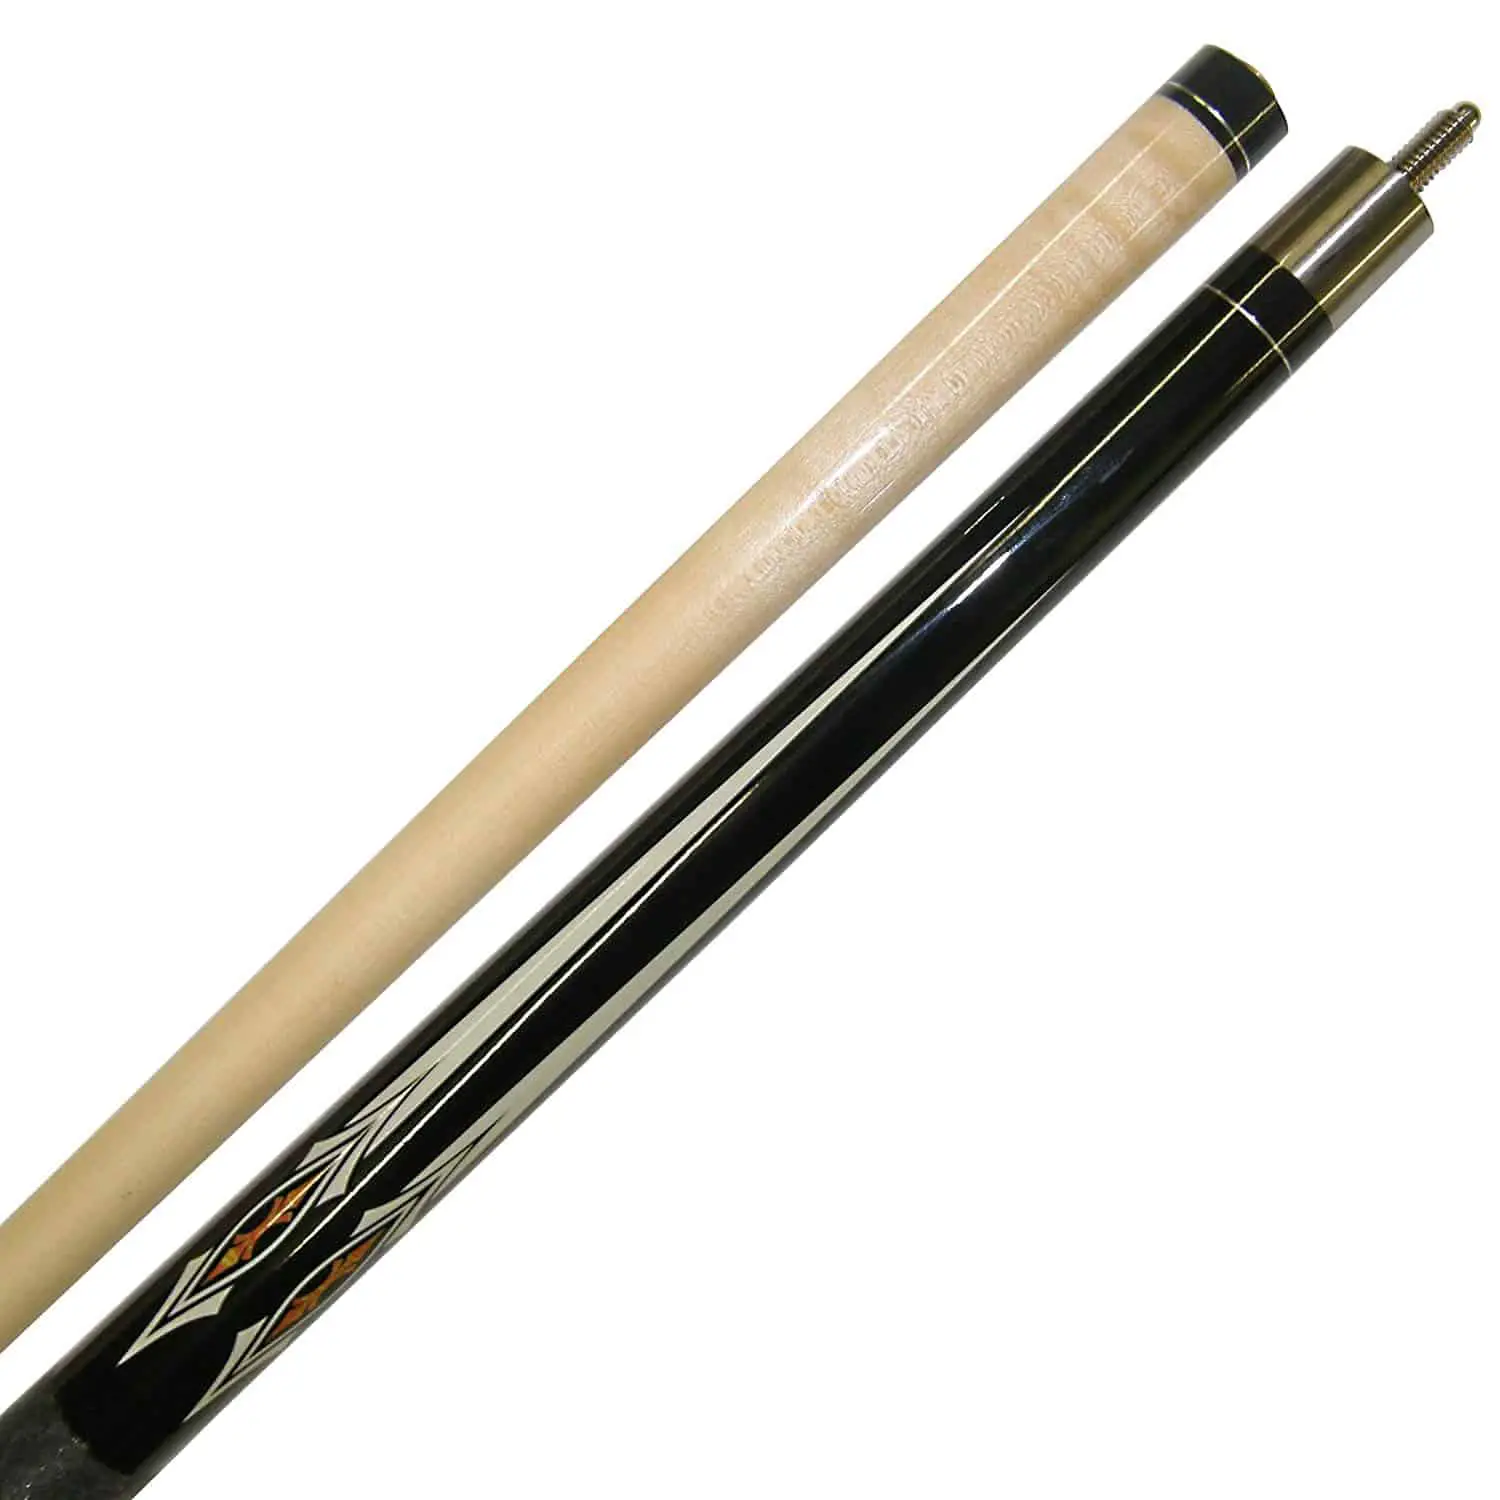 Hardwood Canadian Maple billiard sticks